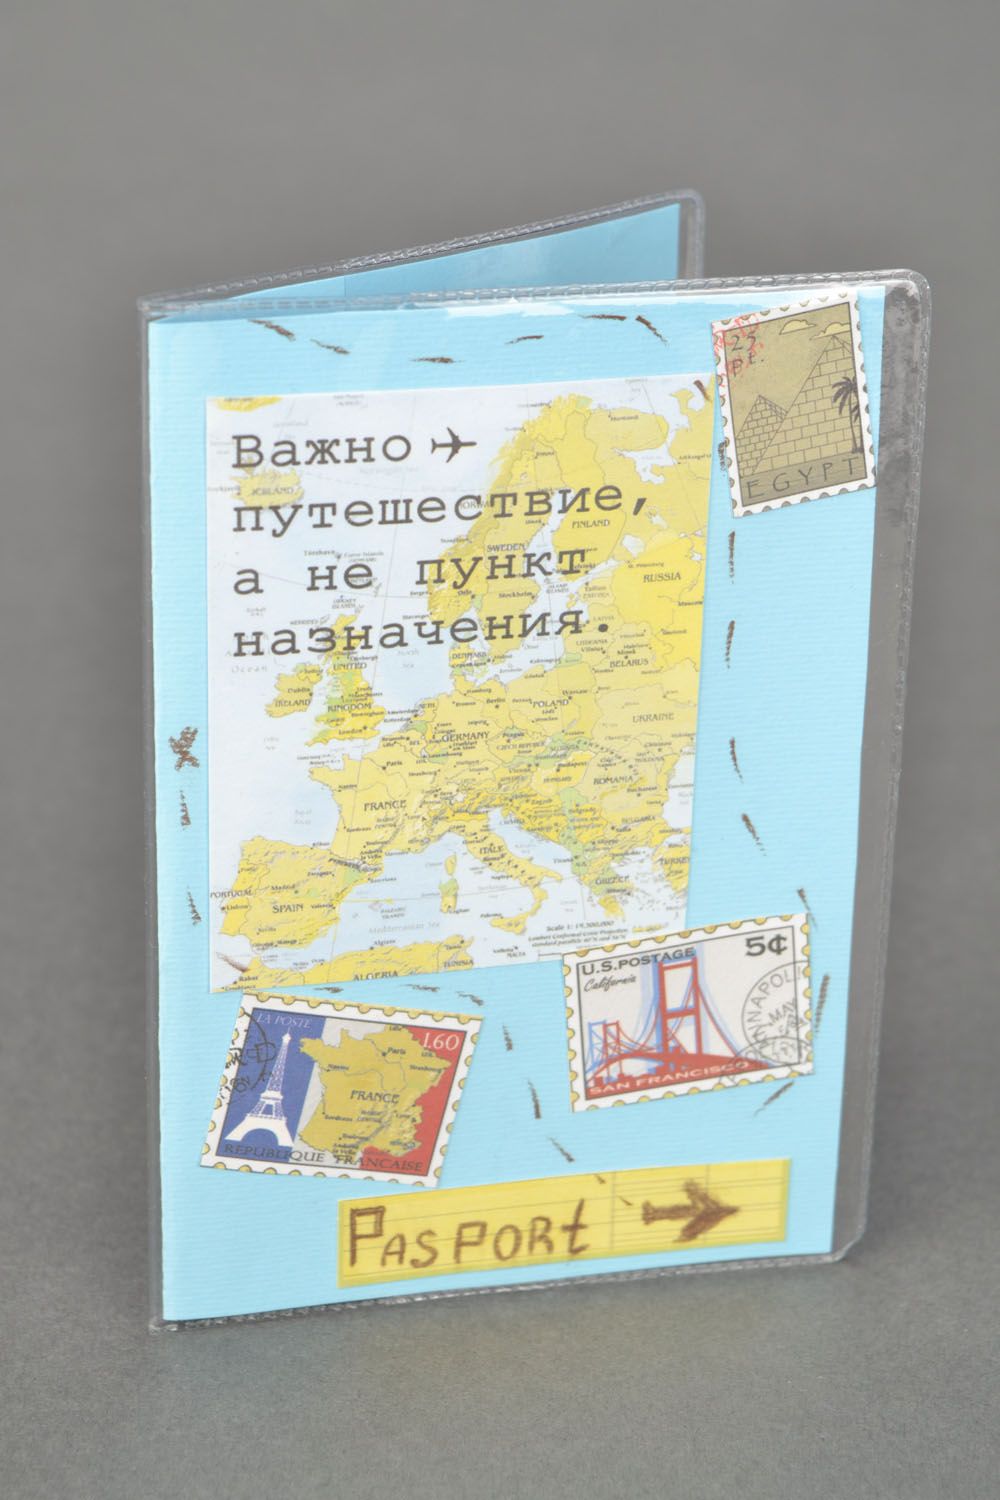 Passport cover made using scrapbooking technique photo 1